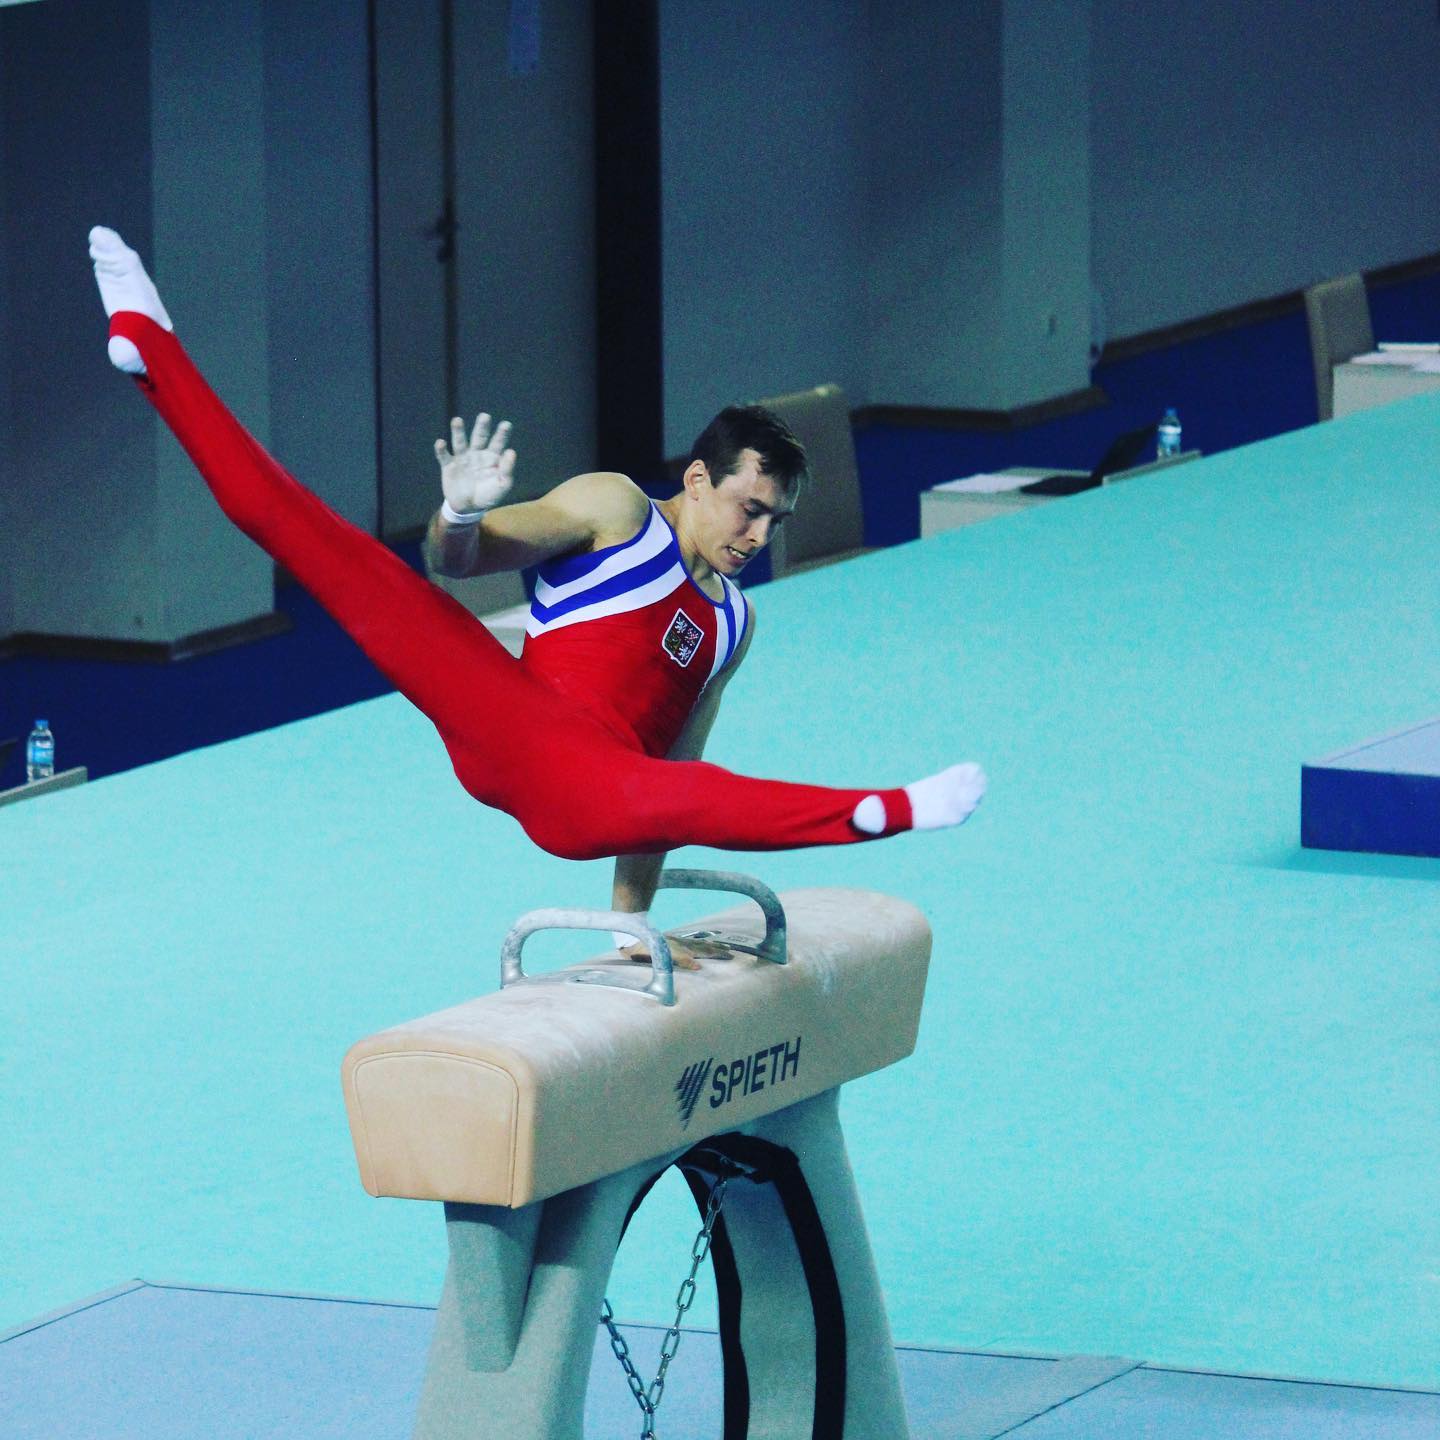 Czech Sokols continue to produce international gymnasts